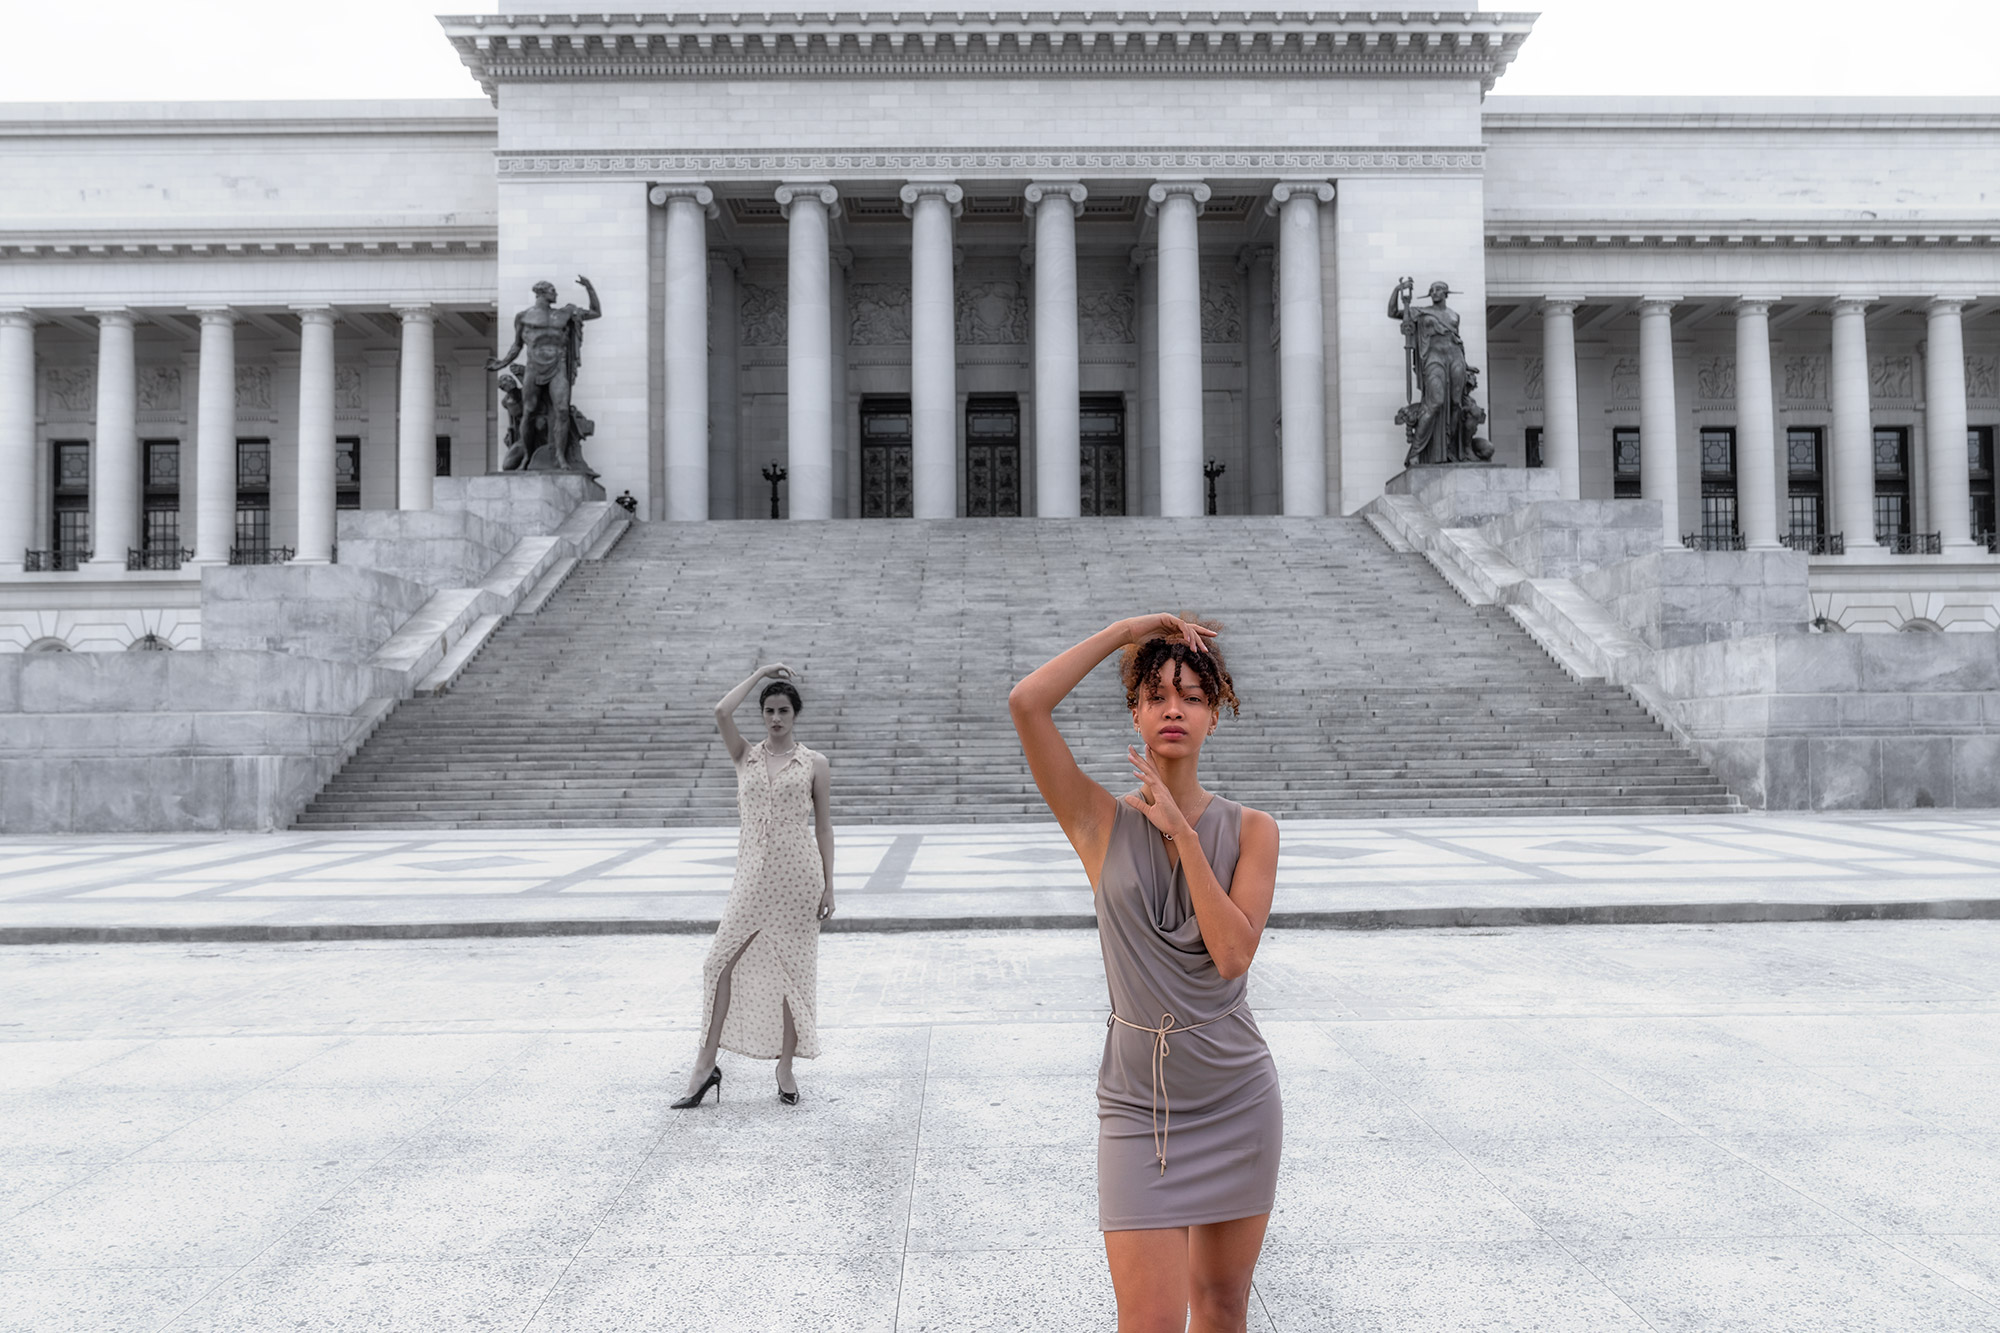 Kuba-Fotoreise. Fotomodelle vor dem Capitol fotografiert.